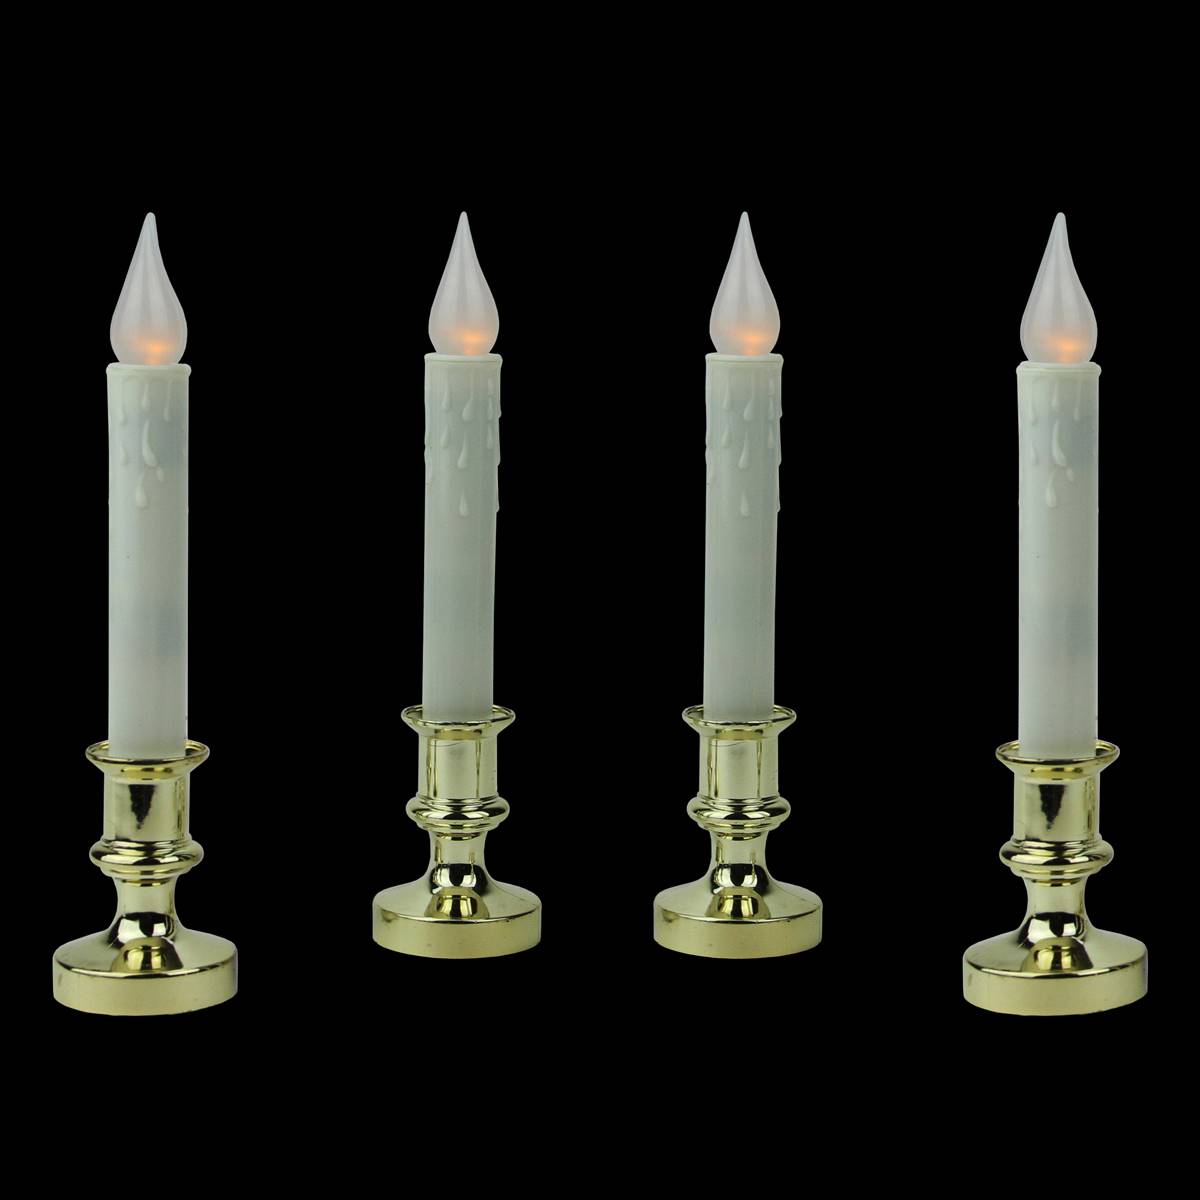 Northlight Seasonal Set Of 4 LED Window Christmas Candle